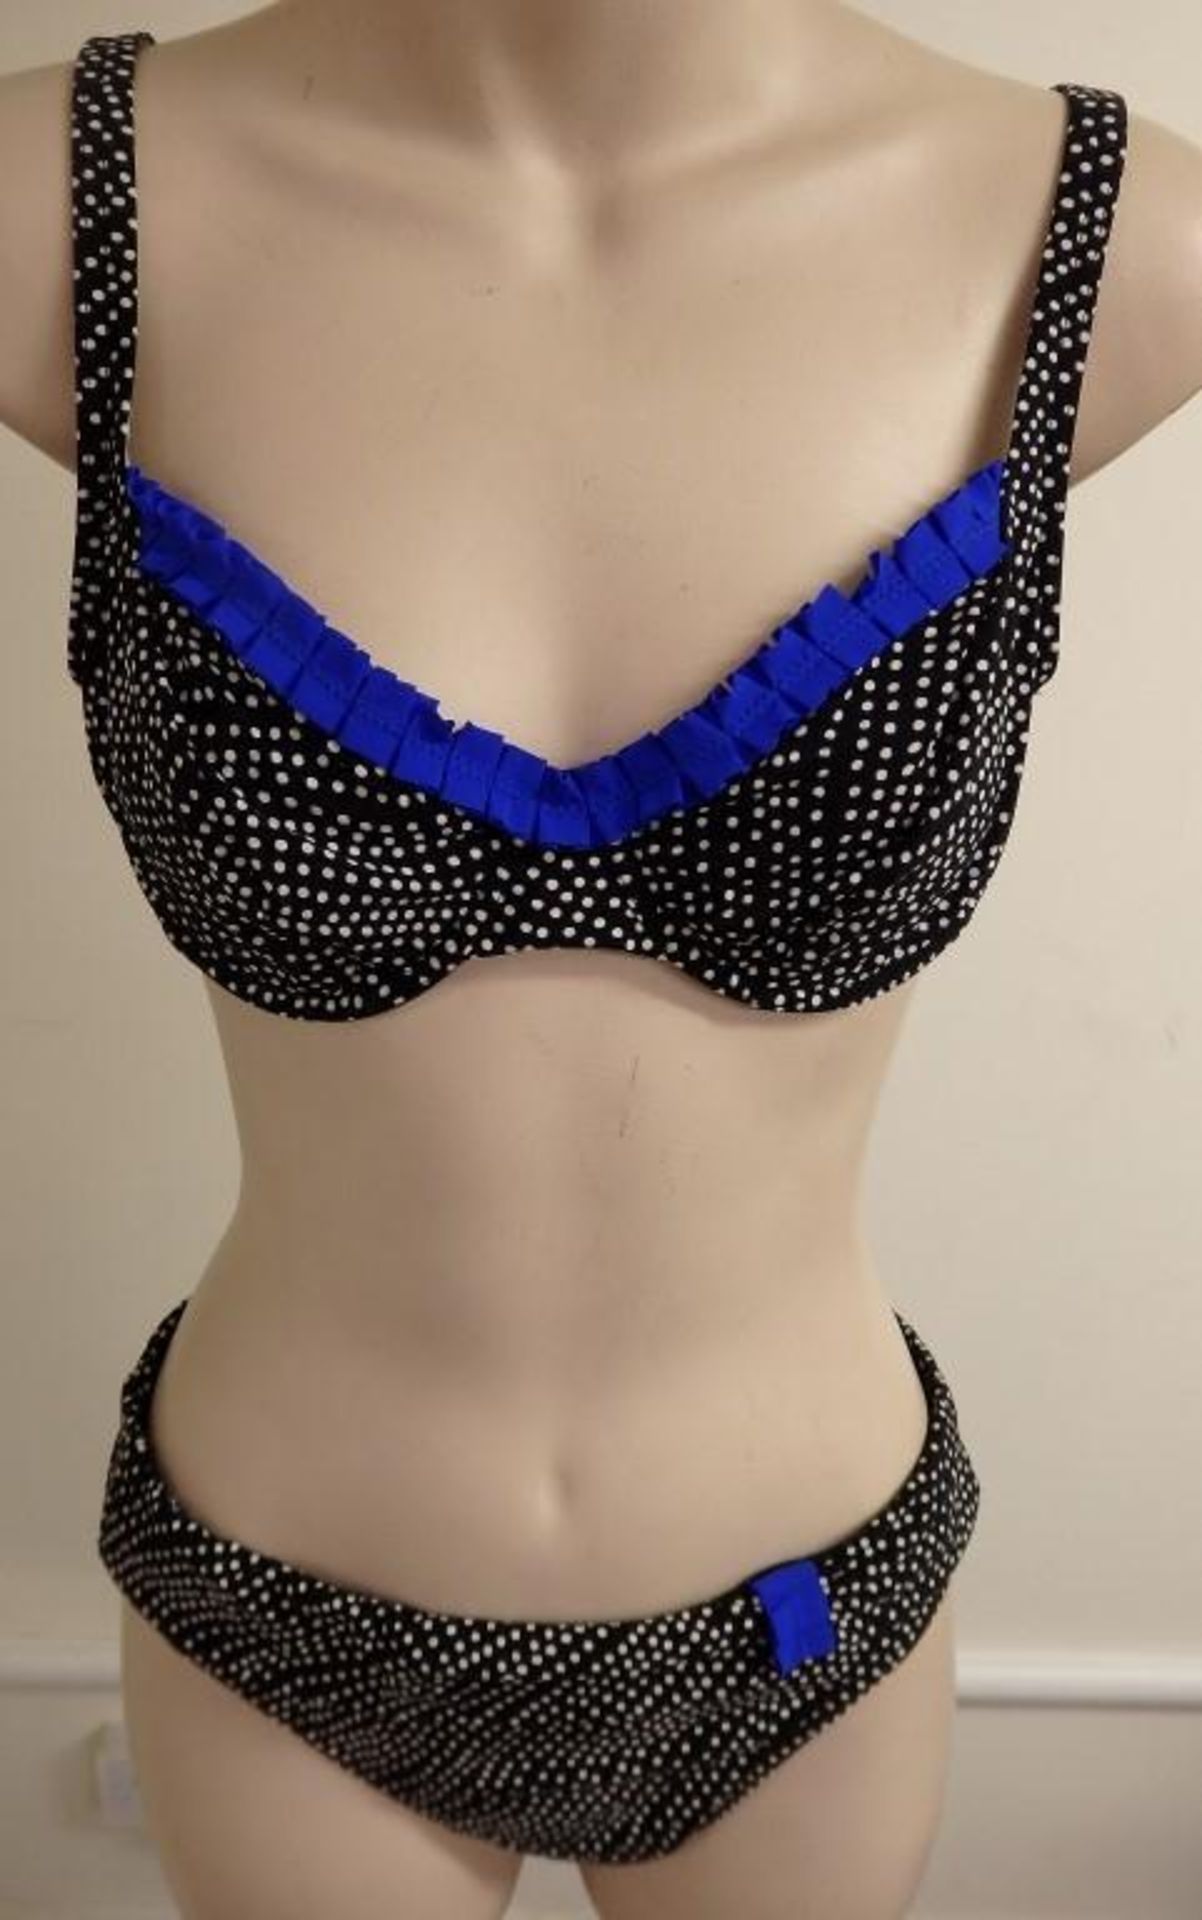 1 x Rasurel - Black Polka dot with royal blue trim &frill Tobago Bikini - B21068 - Size 2C - UK 32 - - Image 8 of 10